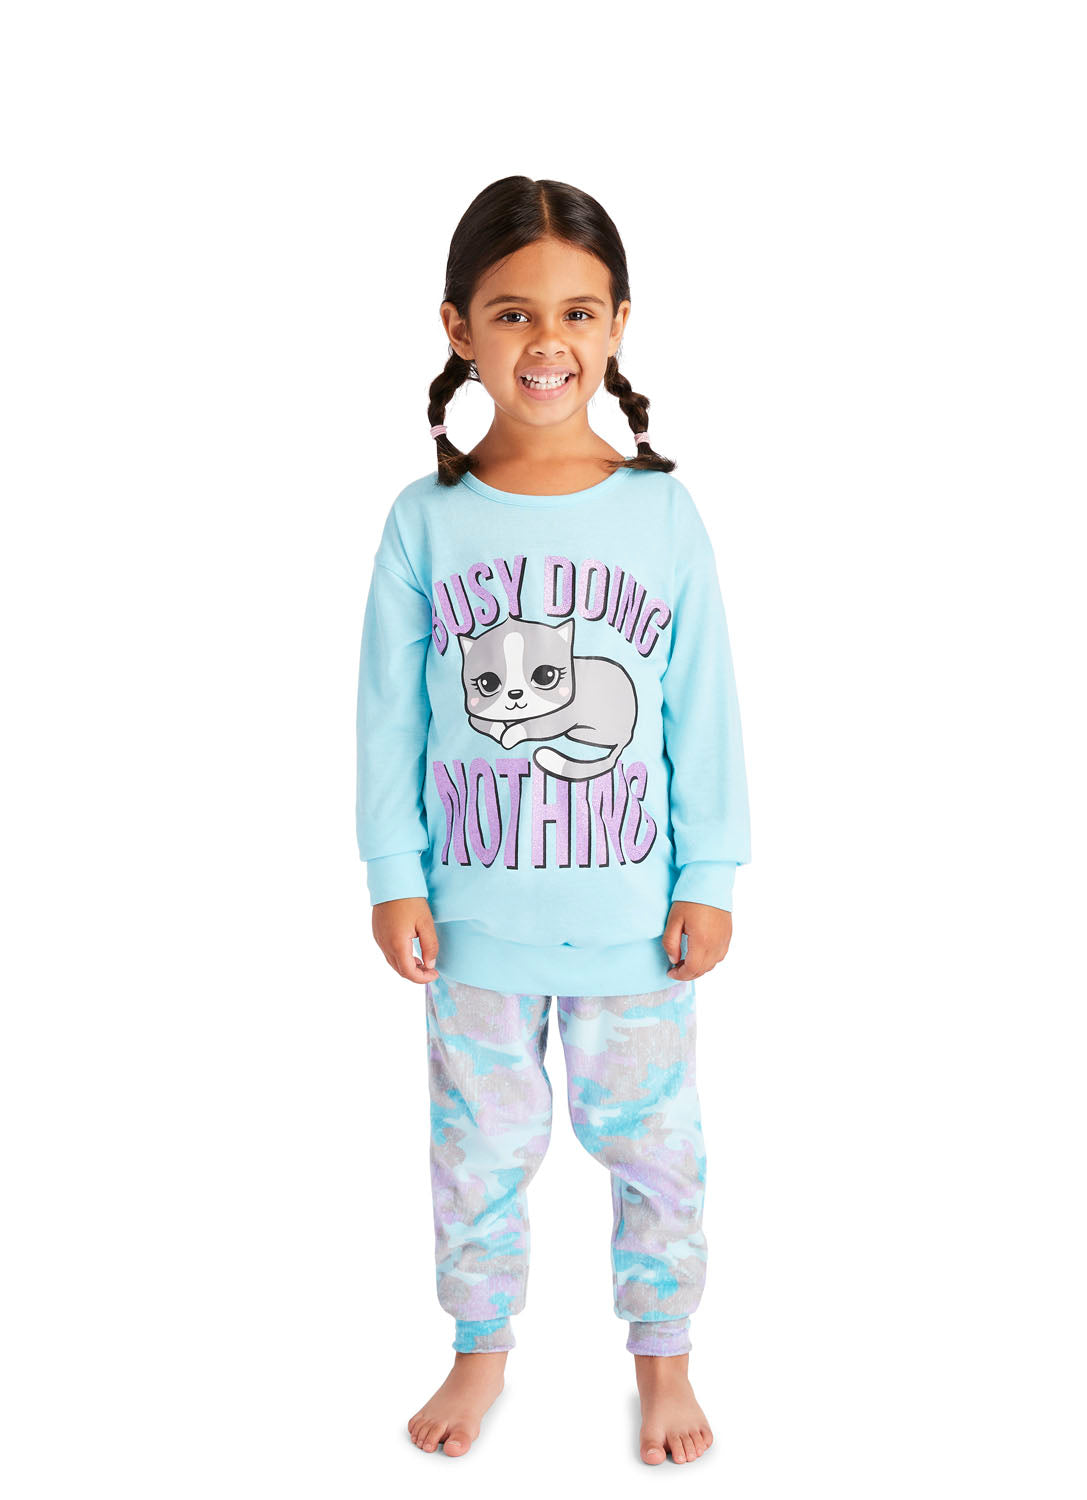 Little Girl wearing Cat print Pajama Set in Aqua colour